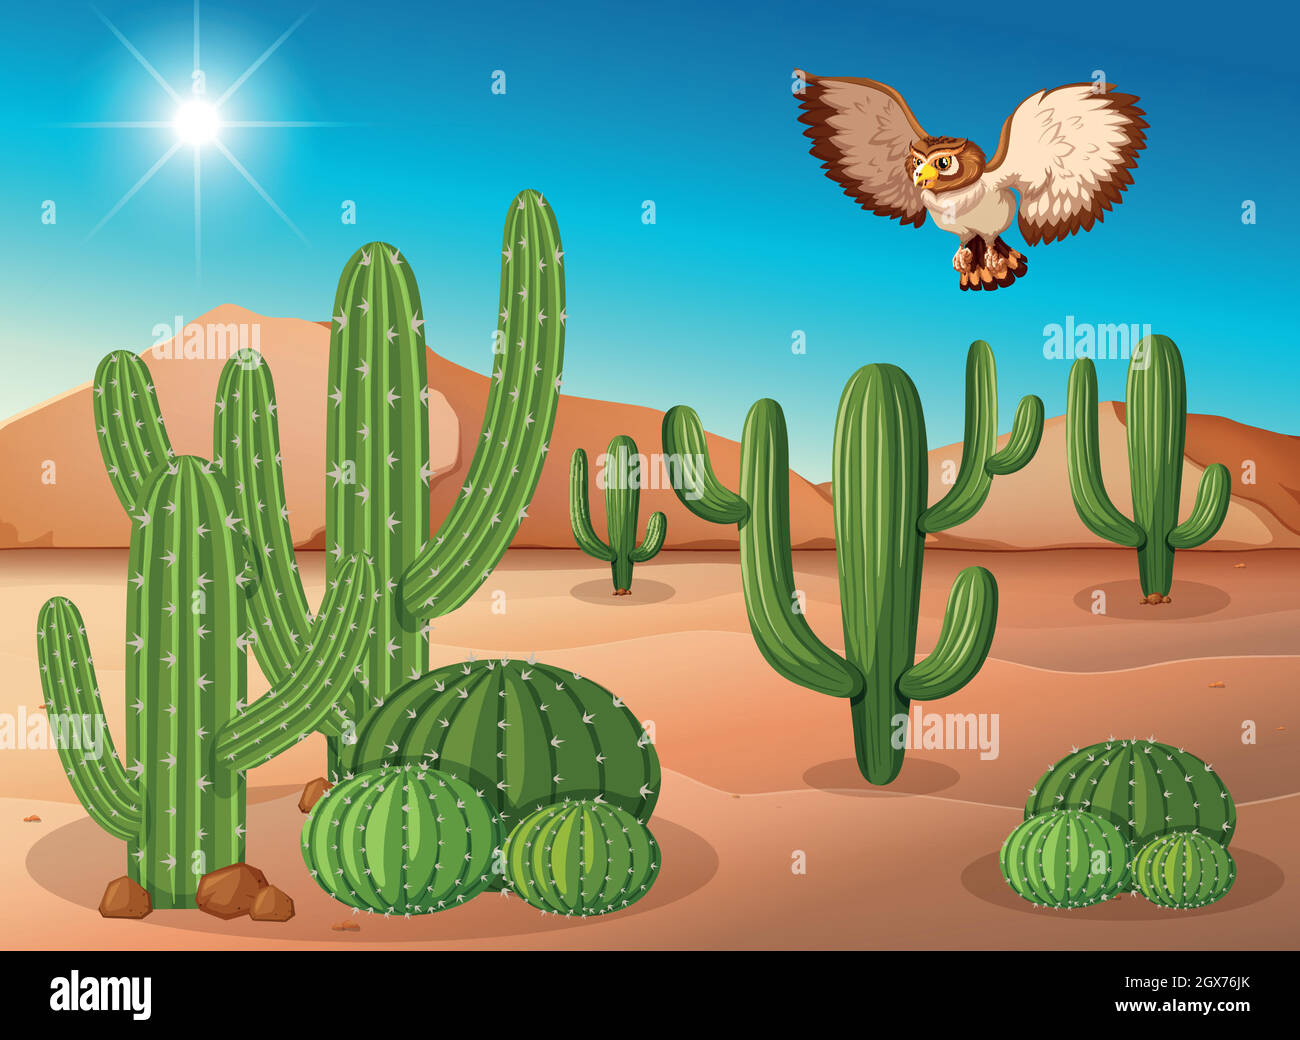 Owl flying over cactus in desert Stock Vector